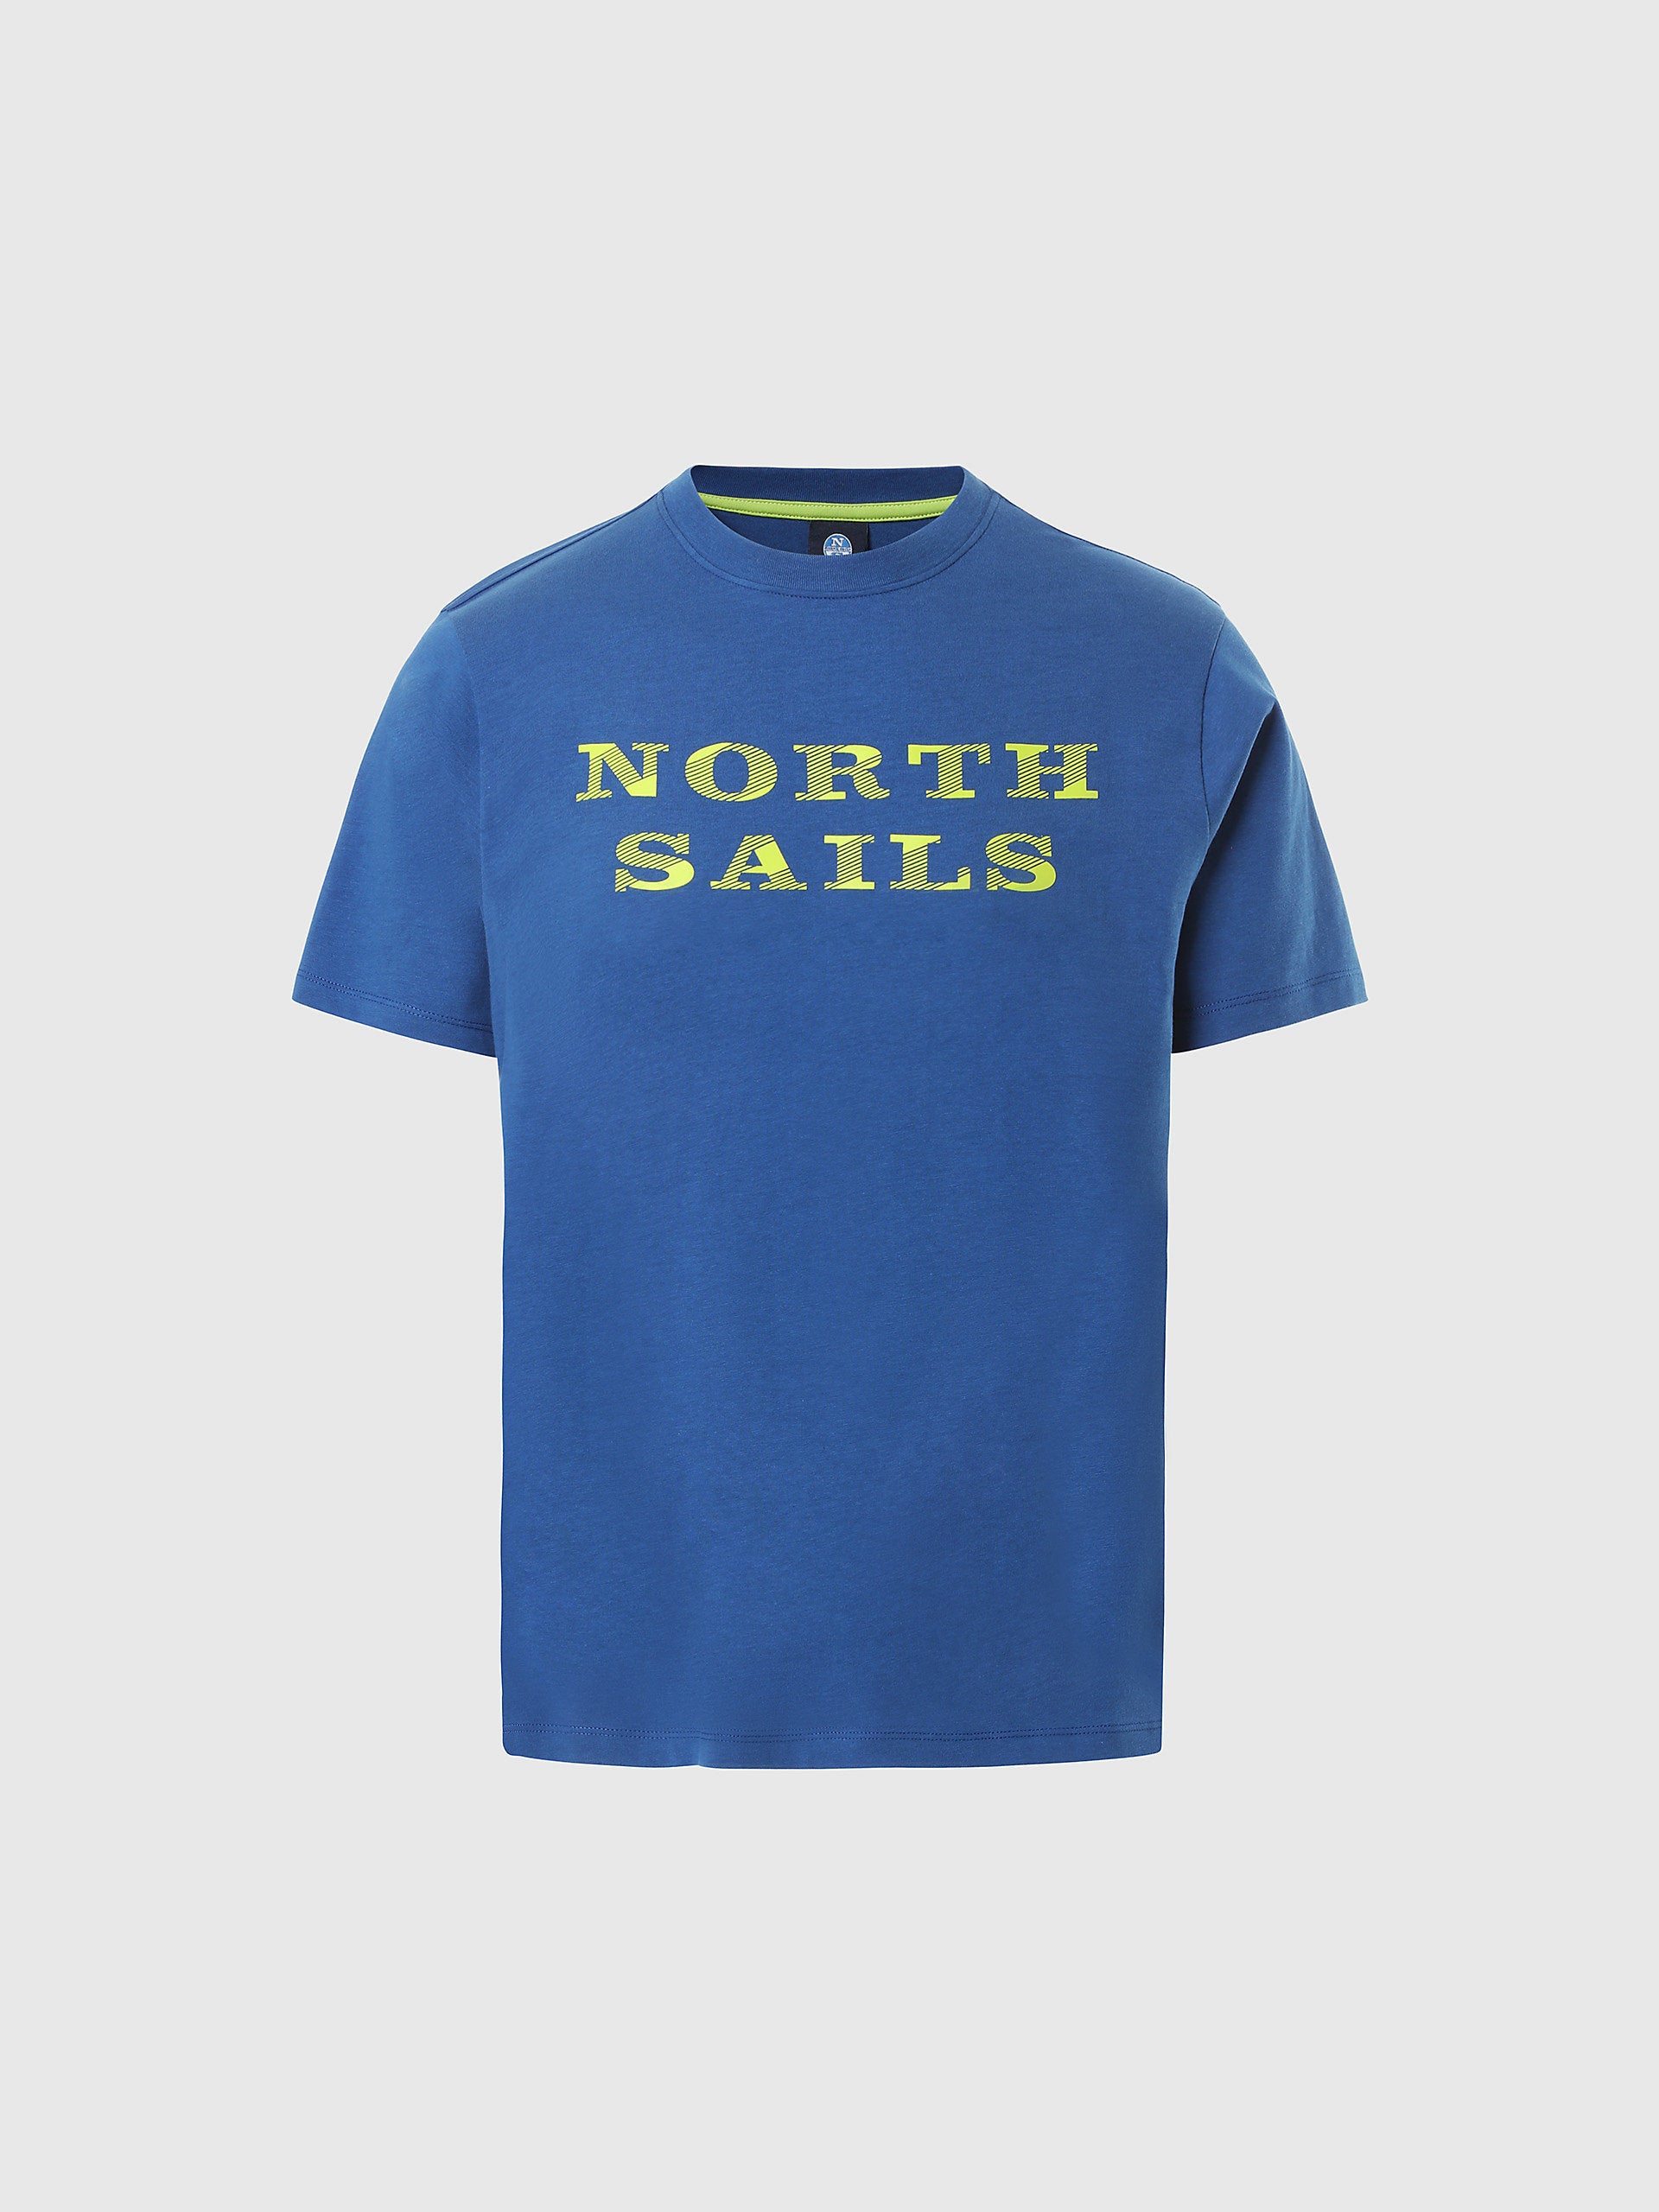 North Sails - T-shirt con stampa letteringNorth SailsOcean blueS